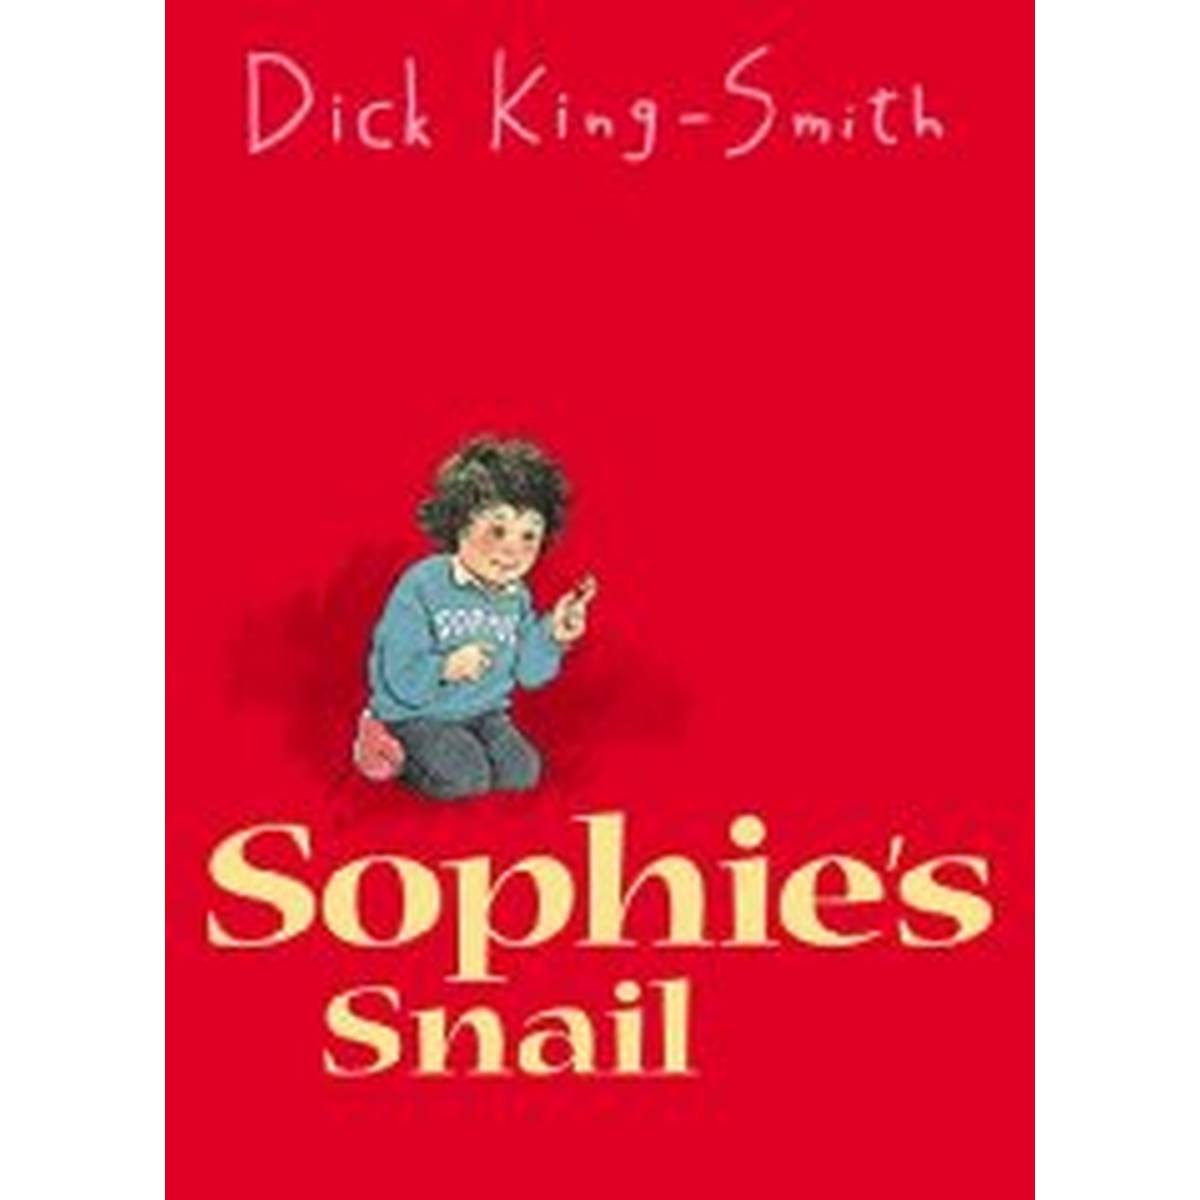 Sophie's Snail